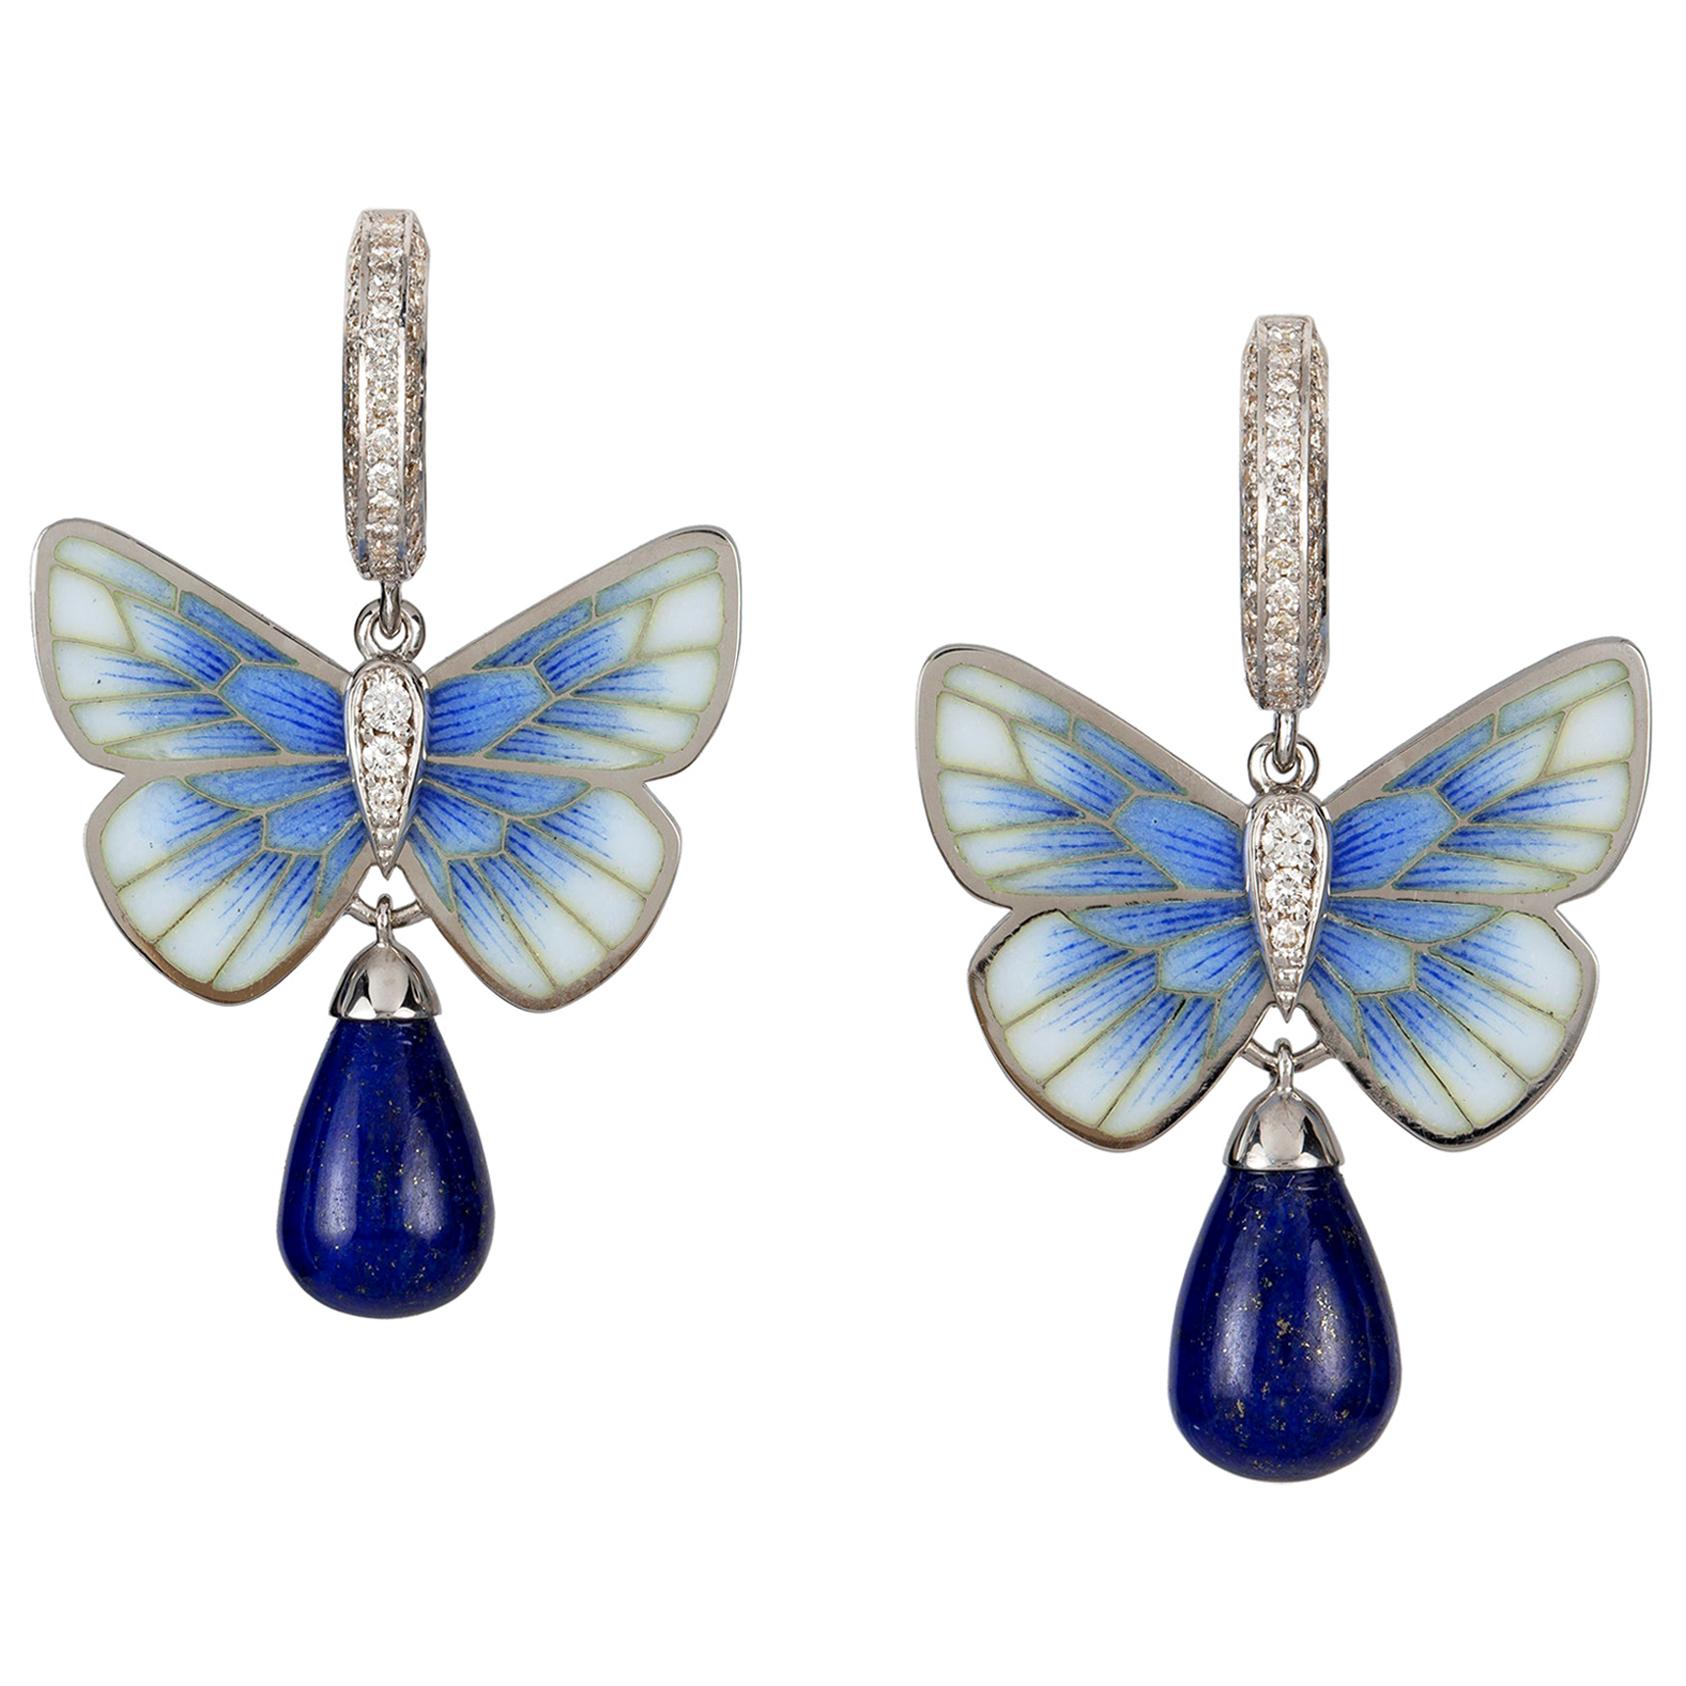 A Pair of Lapis Butterfly Earrings by Ilgiz F